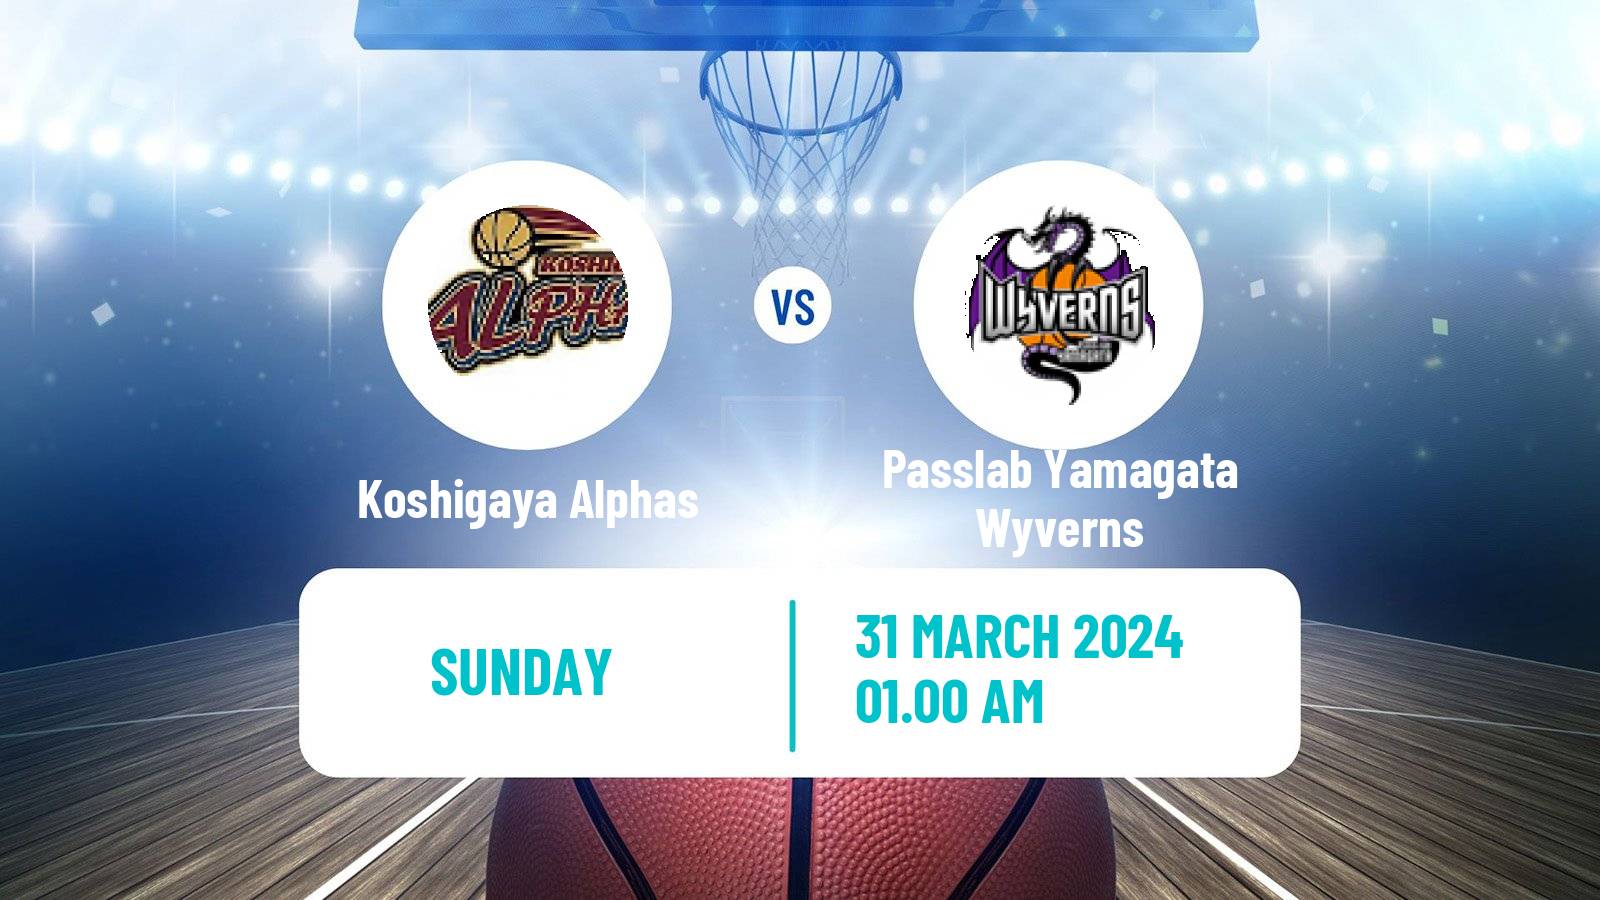 Basketball Japan B2 League Basketball Koshigaya Alphas - Passlab Yamagata Wyverns